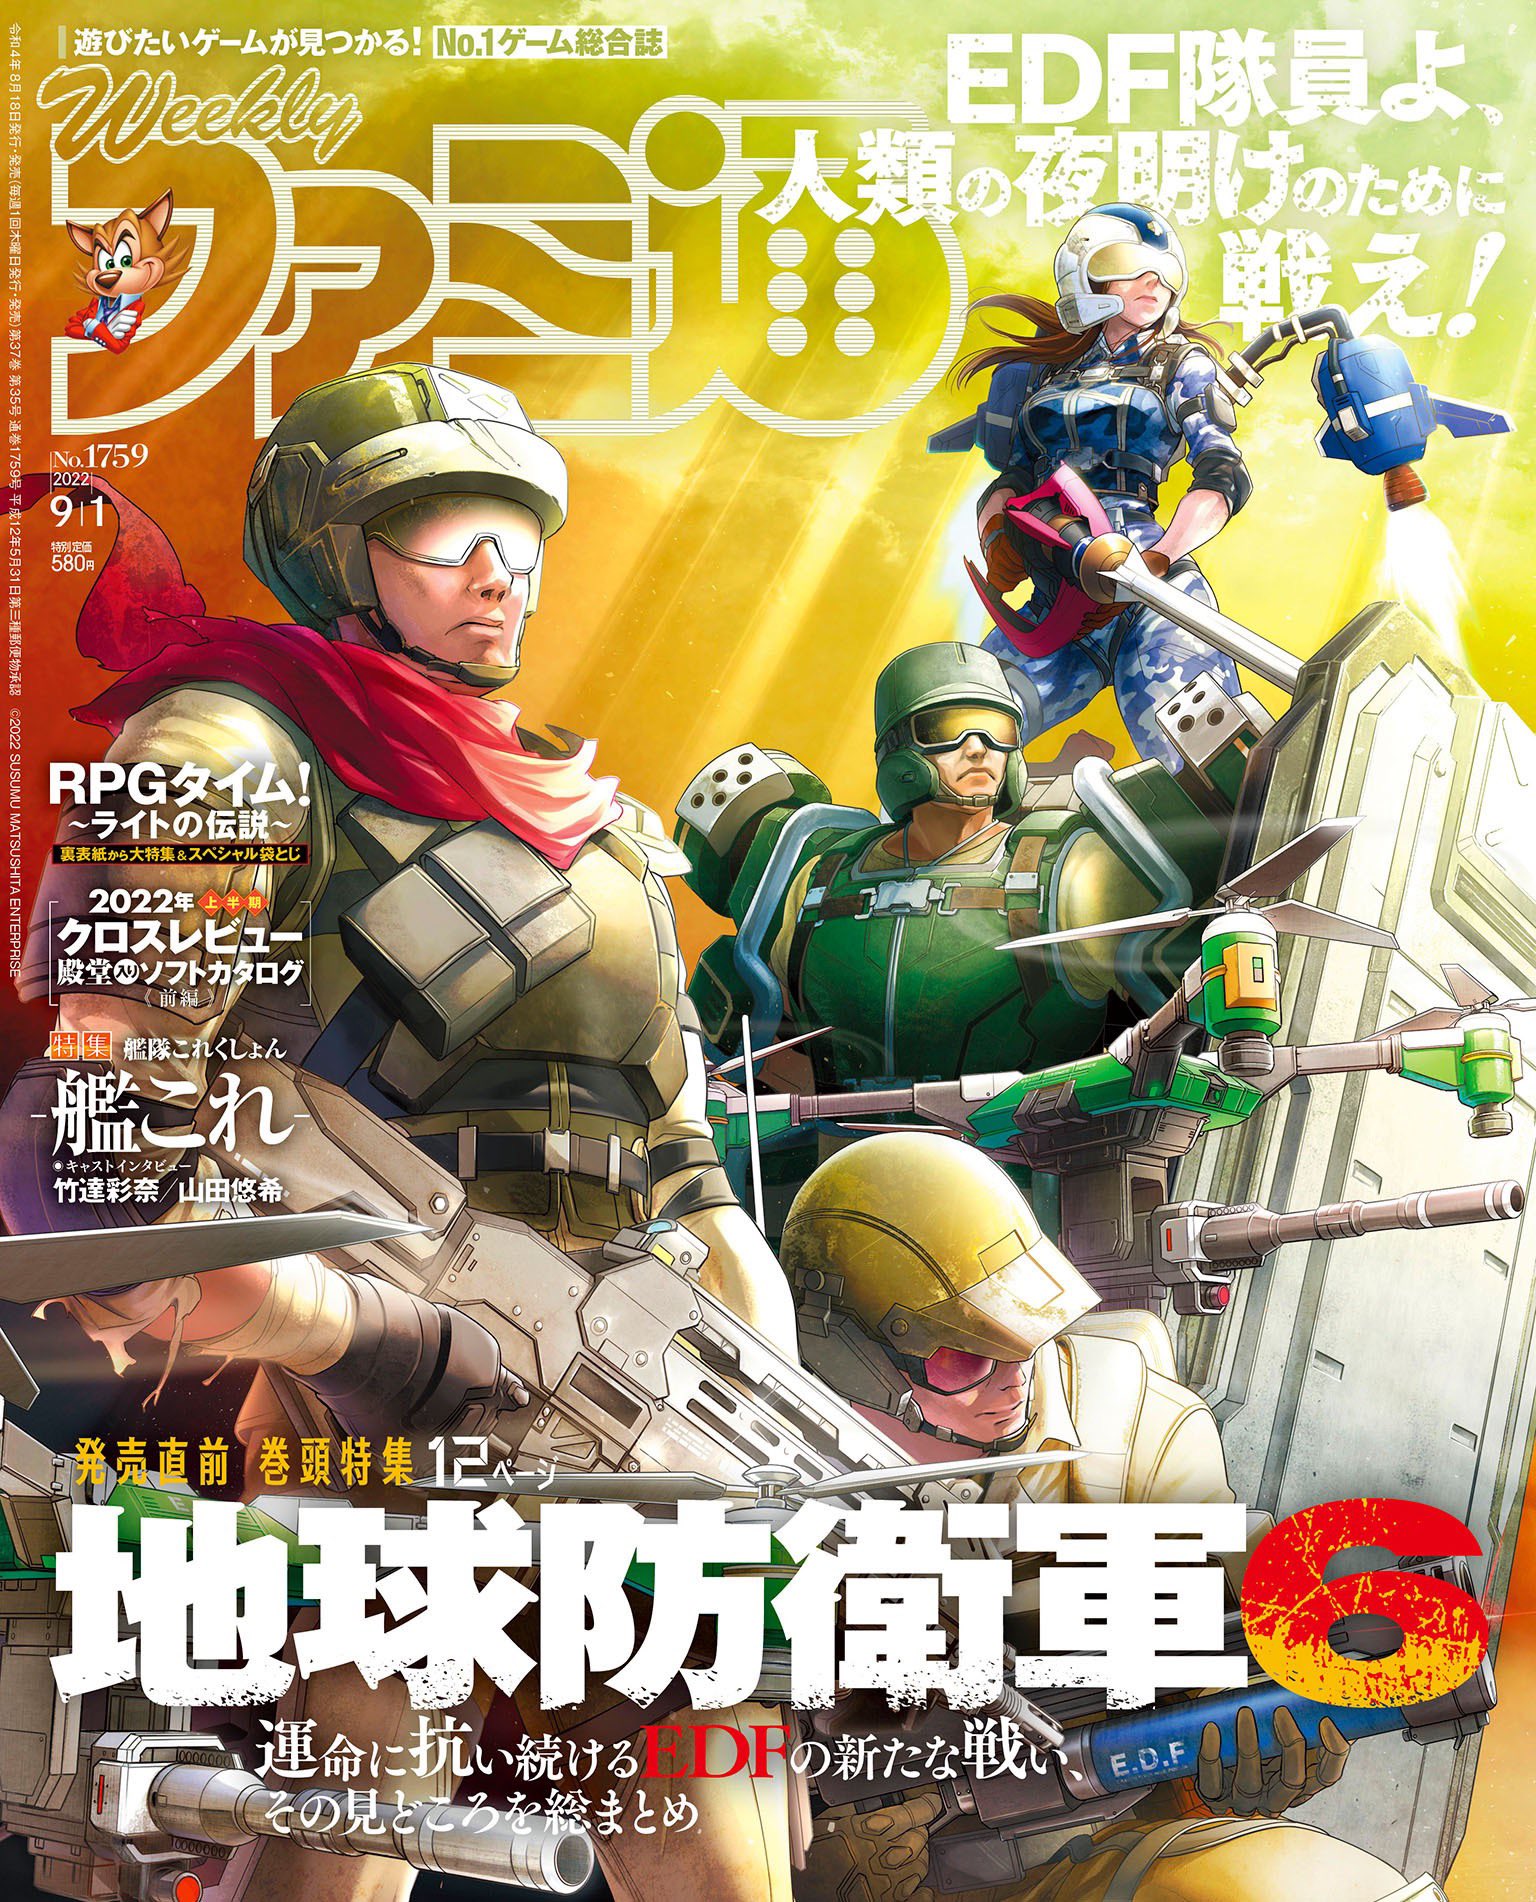 Famitsu cover for September 1